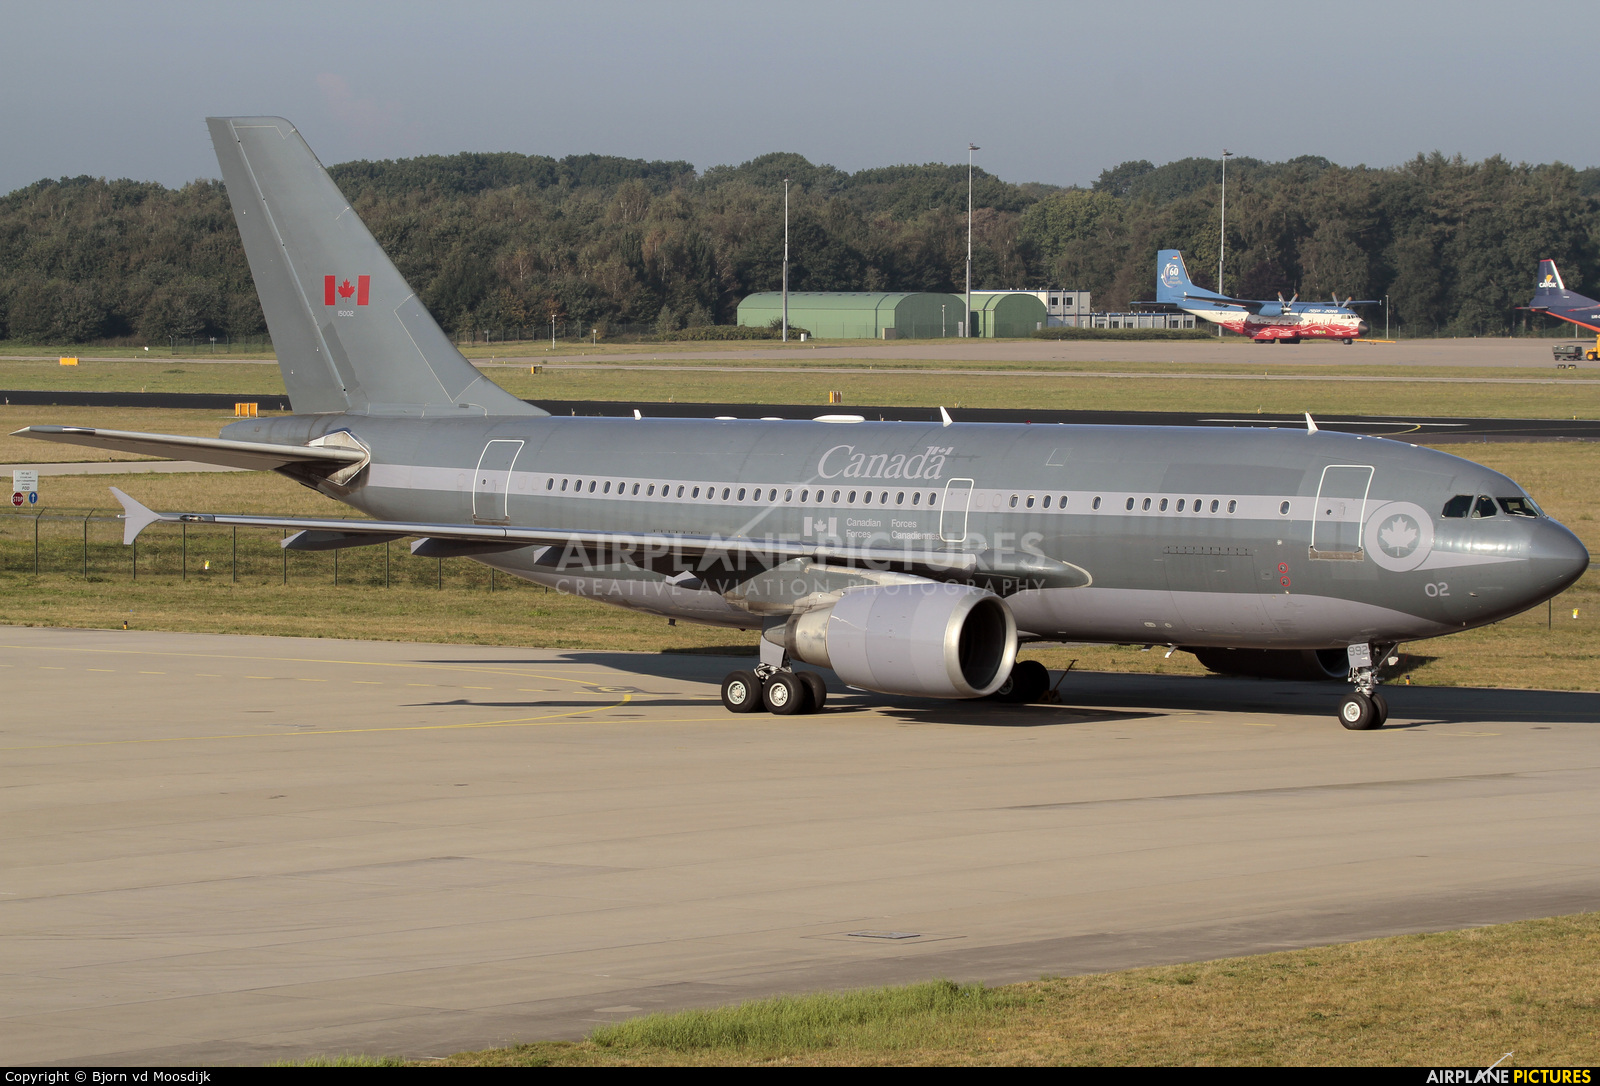 Canada - Air Force 15002 aircraft at Eindhoven